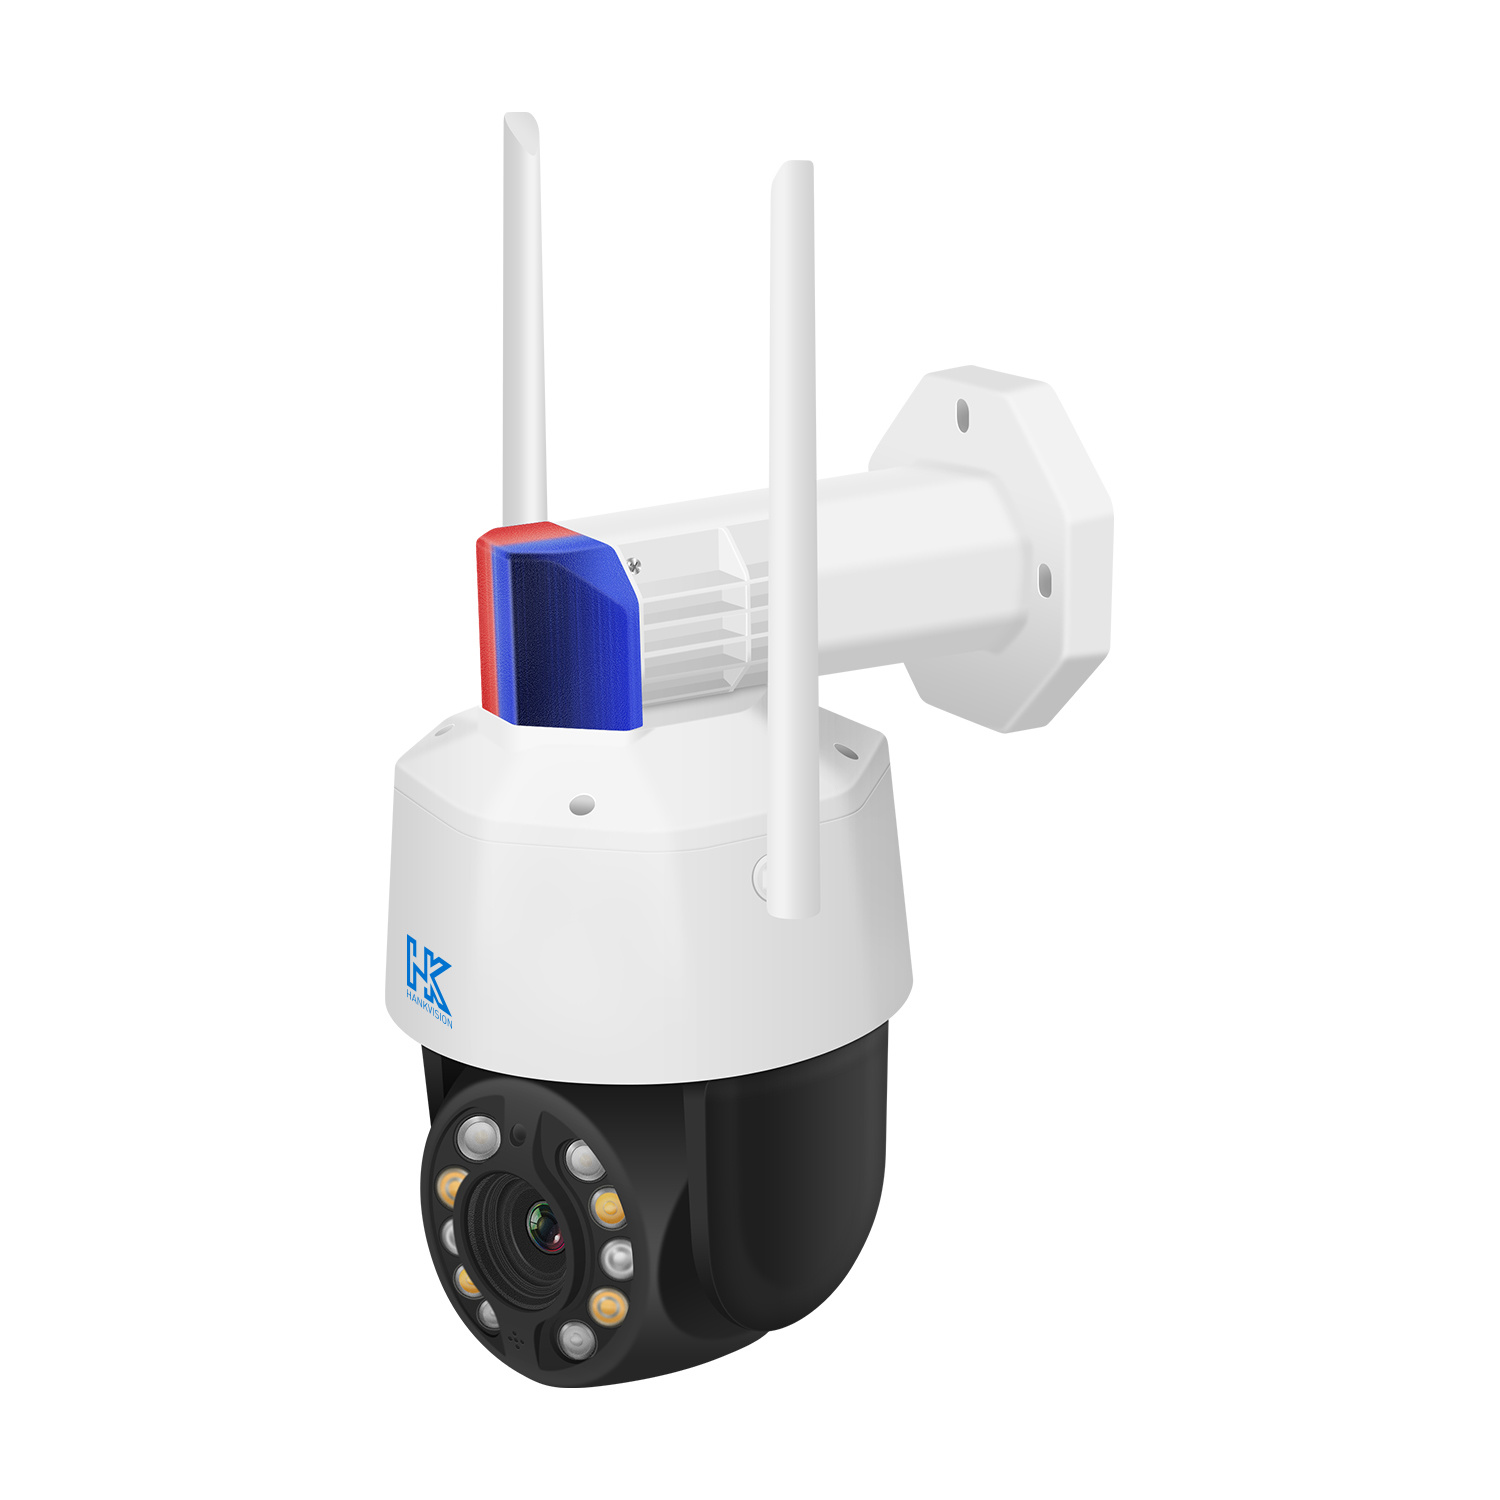 Hankvision WiFi Camera 3MP 20xzoom Poe IP Camera 2-Way Audio Waterproof Tuya CCTV with Alarming Lights